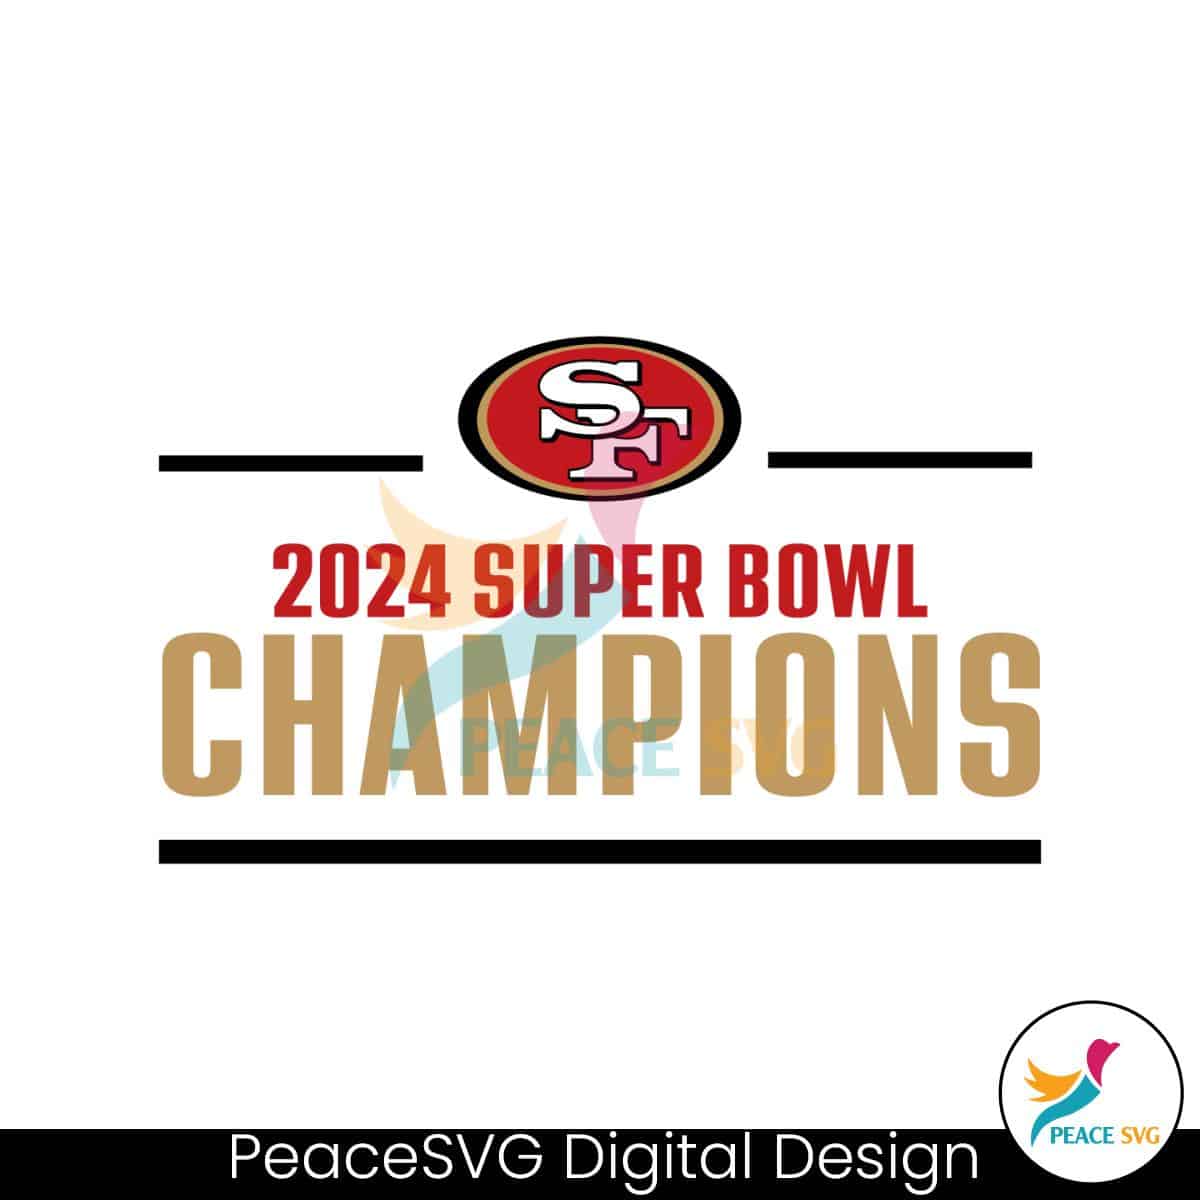 2024 Super Bowl Champions SF 49ers SVG » PeaceSVG